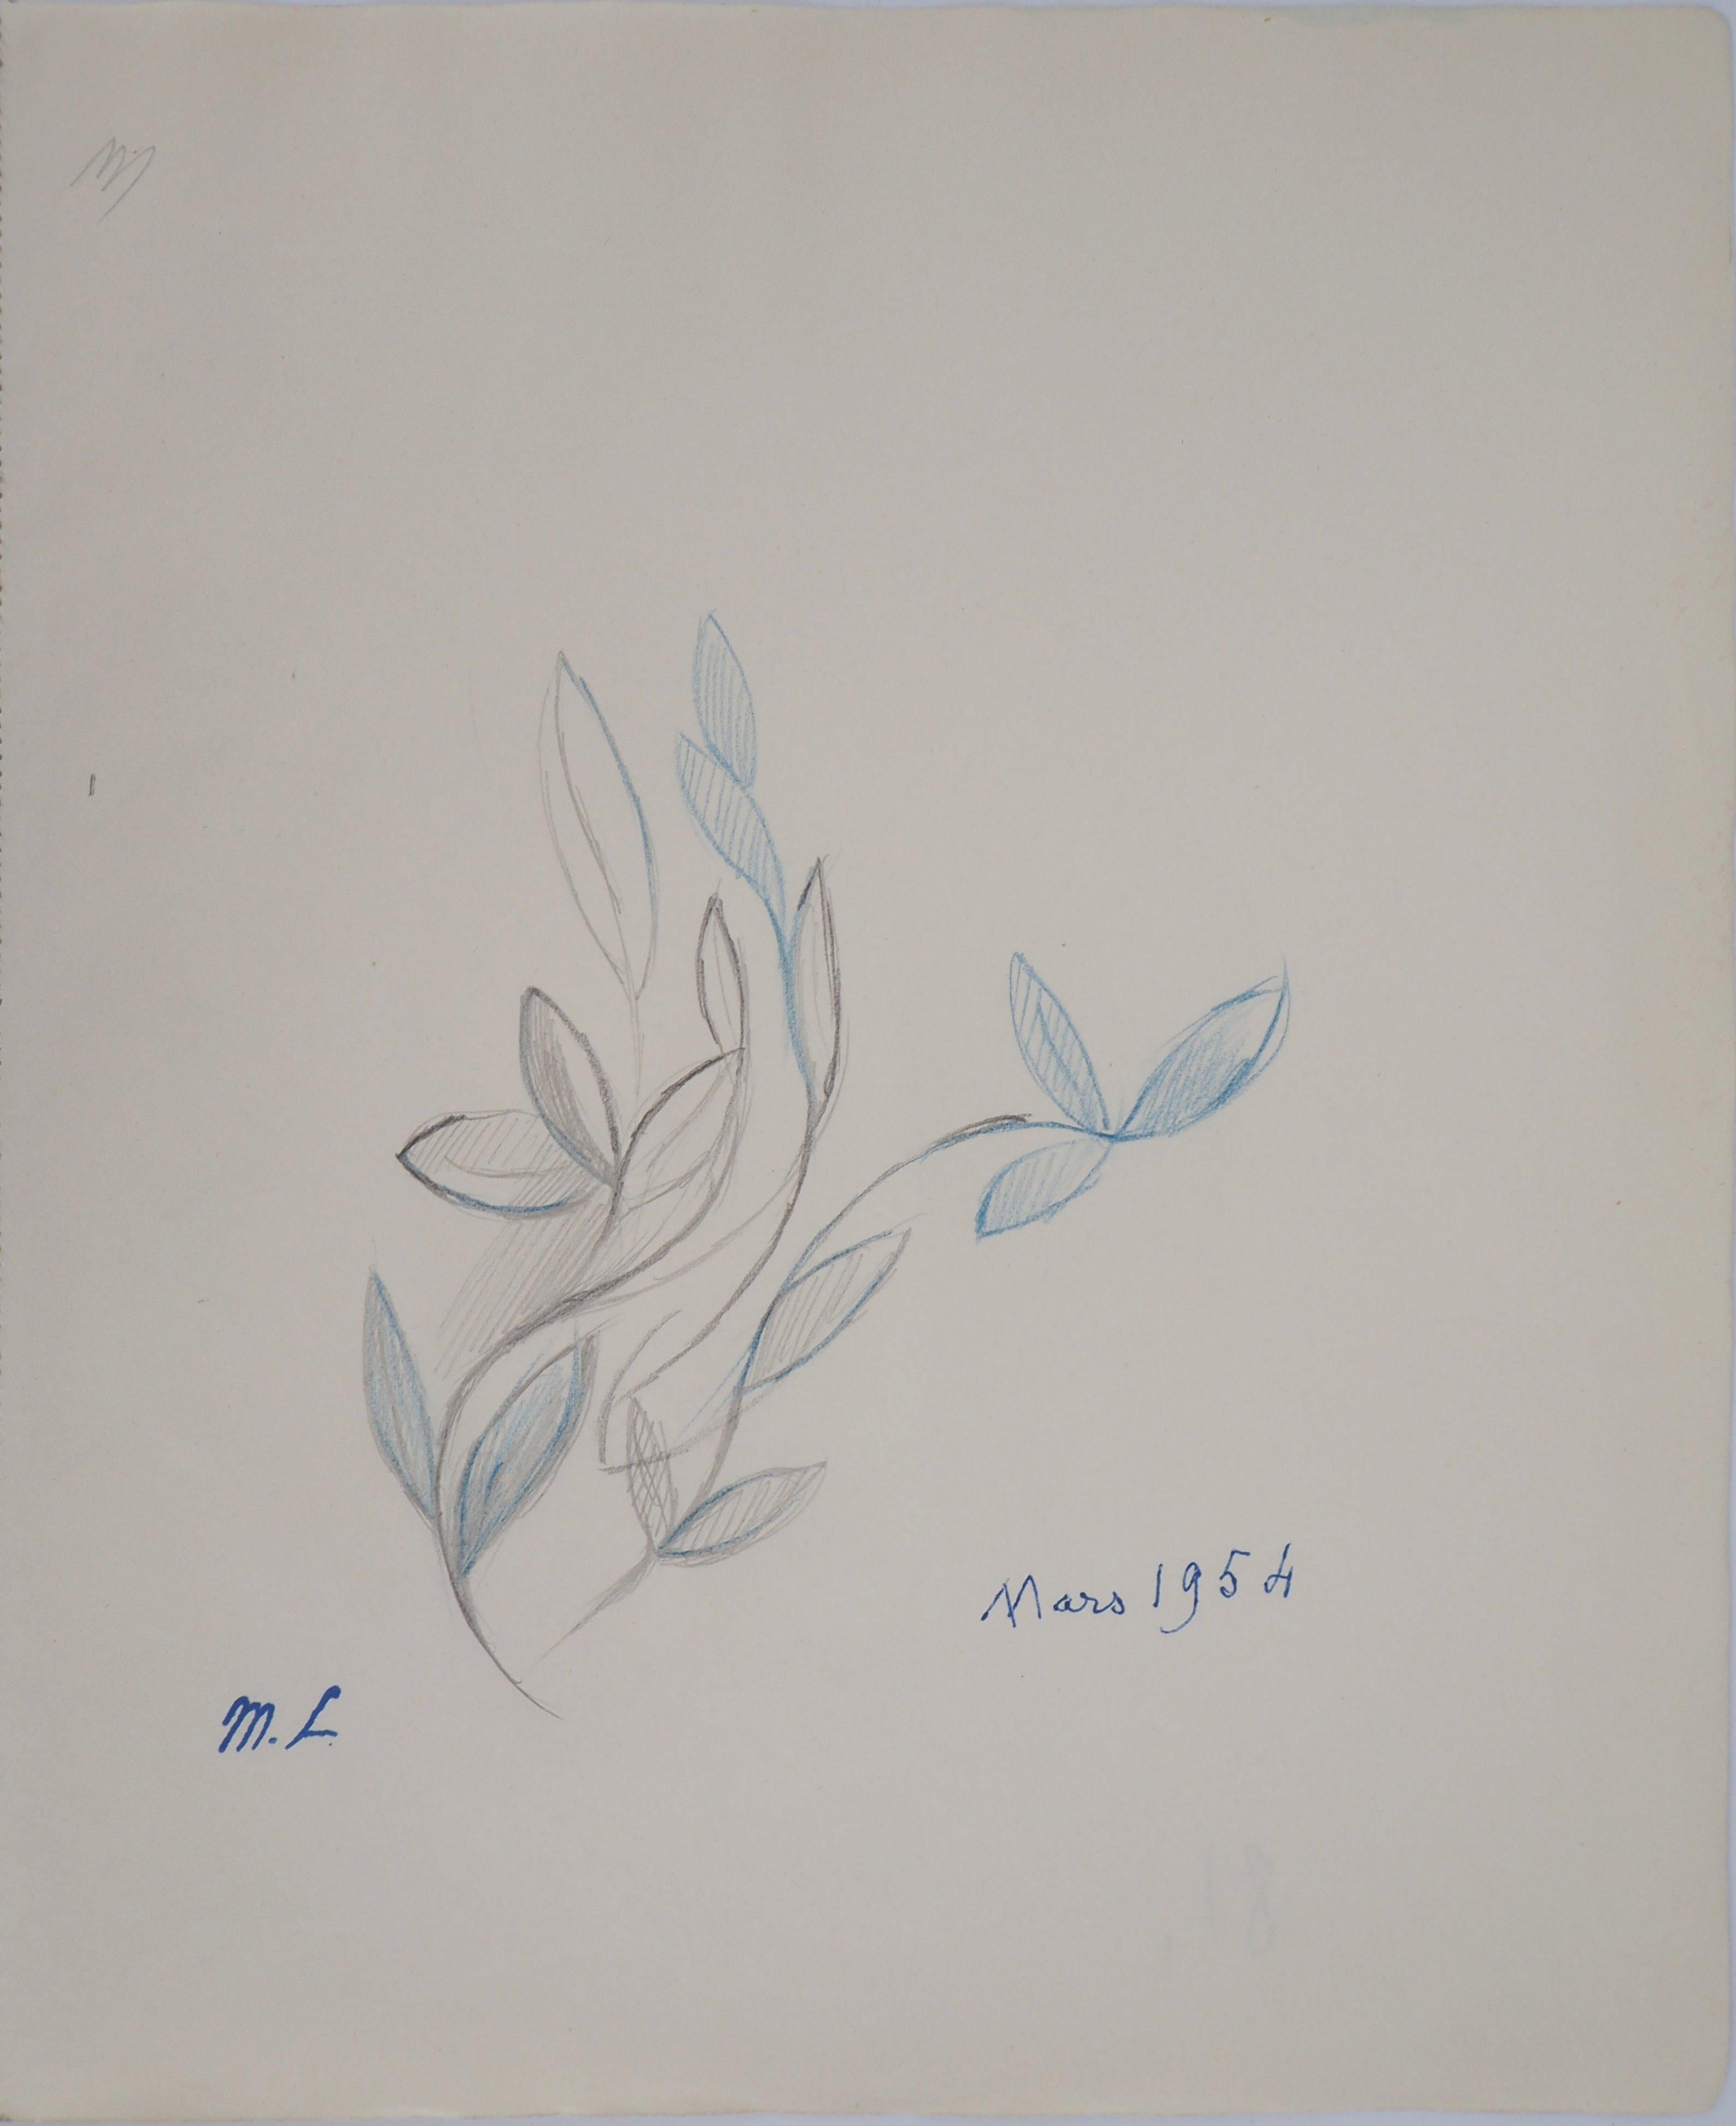 Marie Laurencin Landscape Art - Spring Blossom : Leaves in Blue - Original pencil drawing, 1953